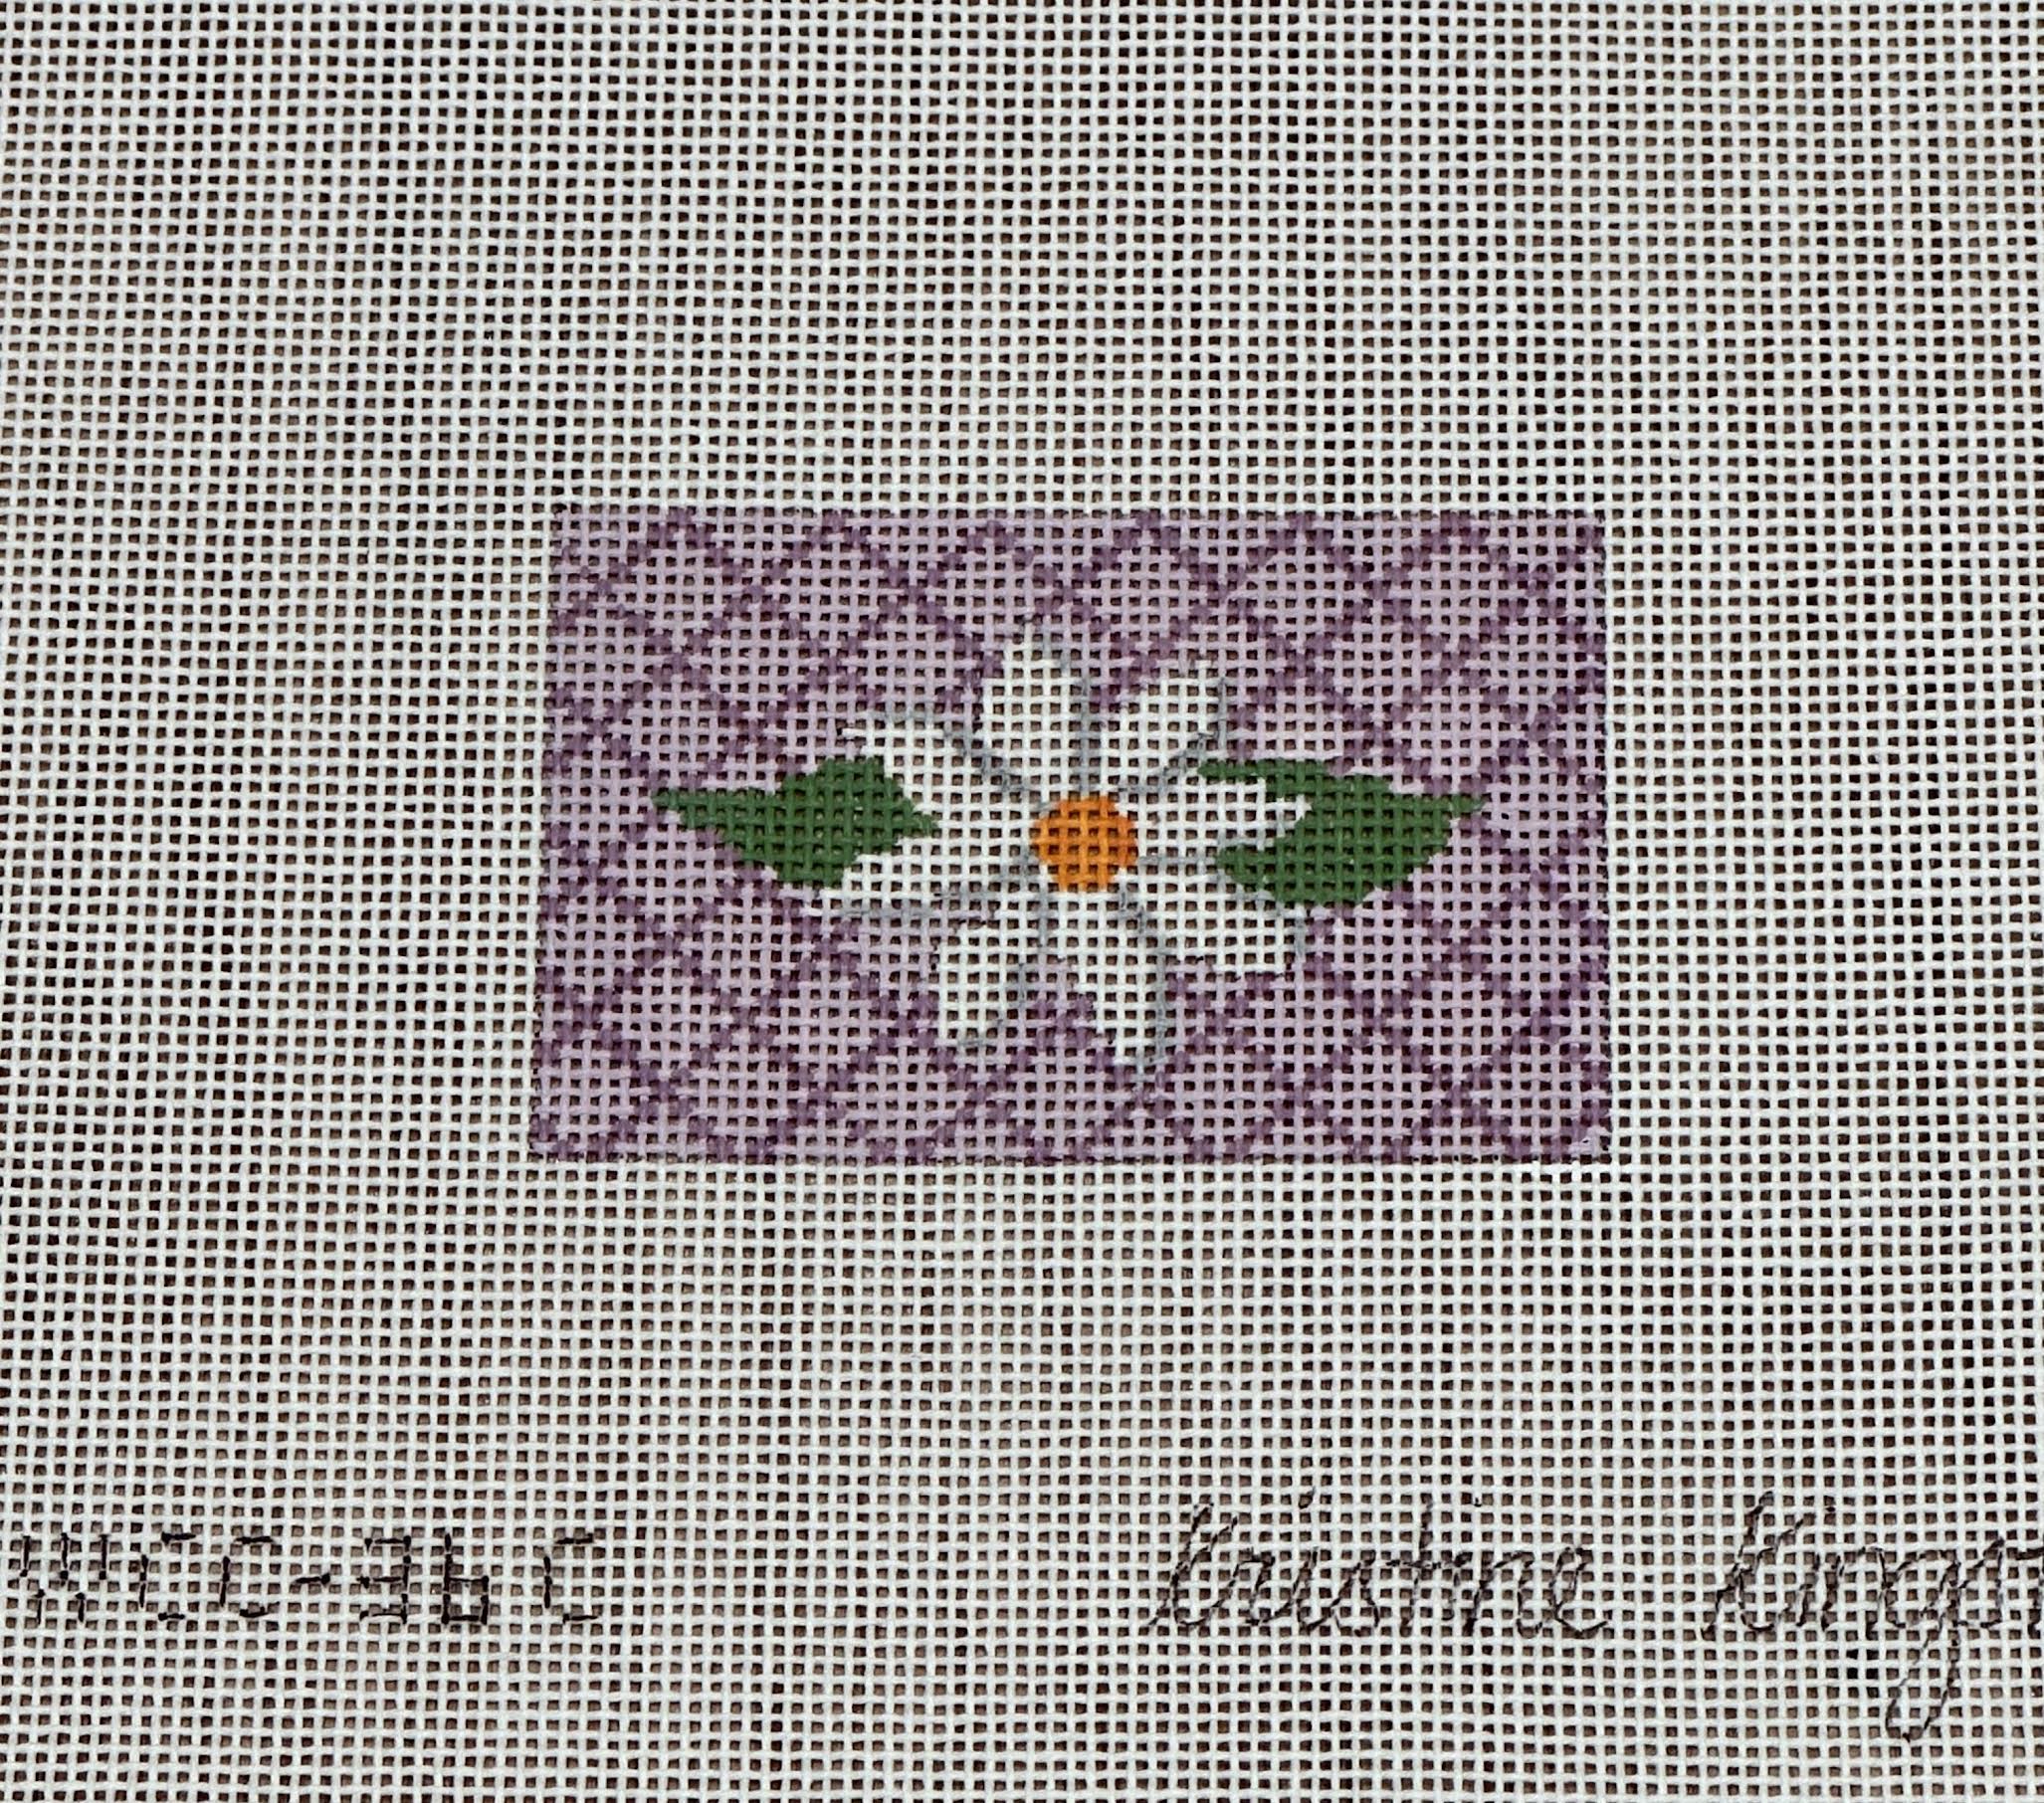 Kristine Kingston WCC-36C White flower on lavender lattice background